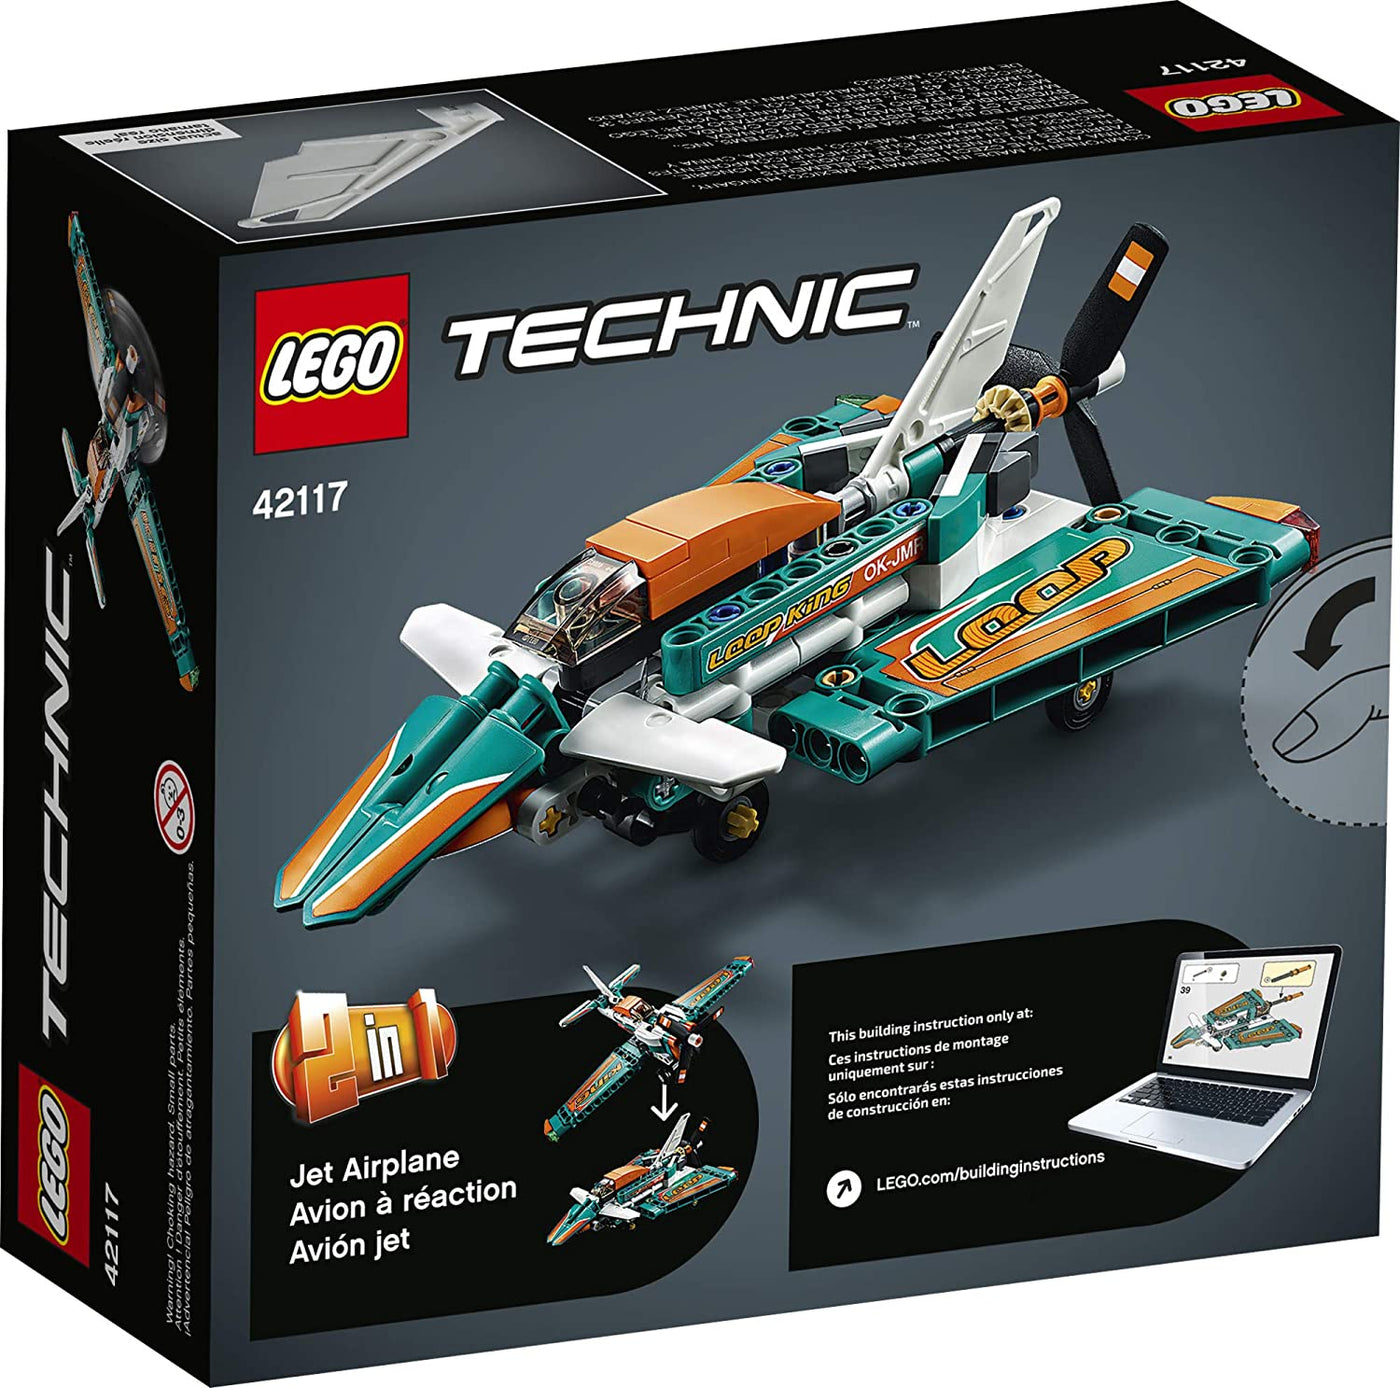 LEGO  Technic™  # 42117- Race Plane